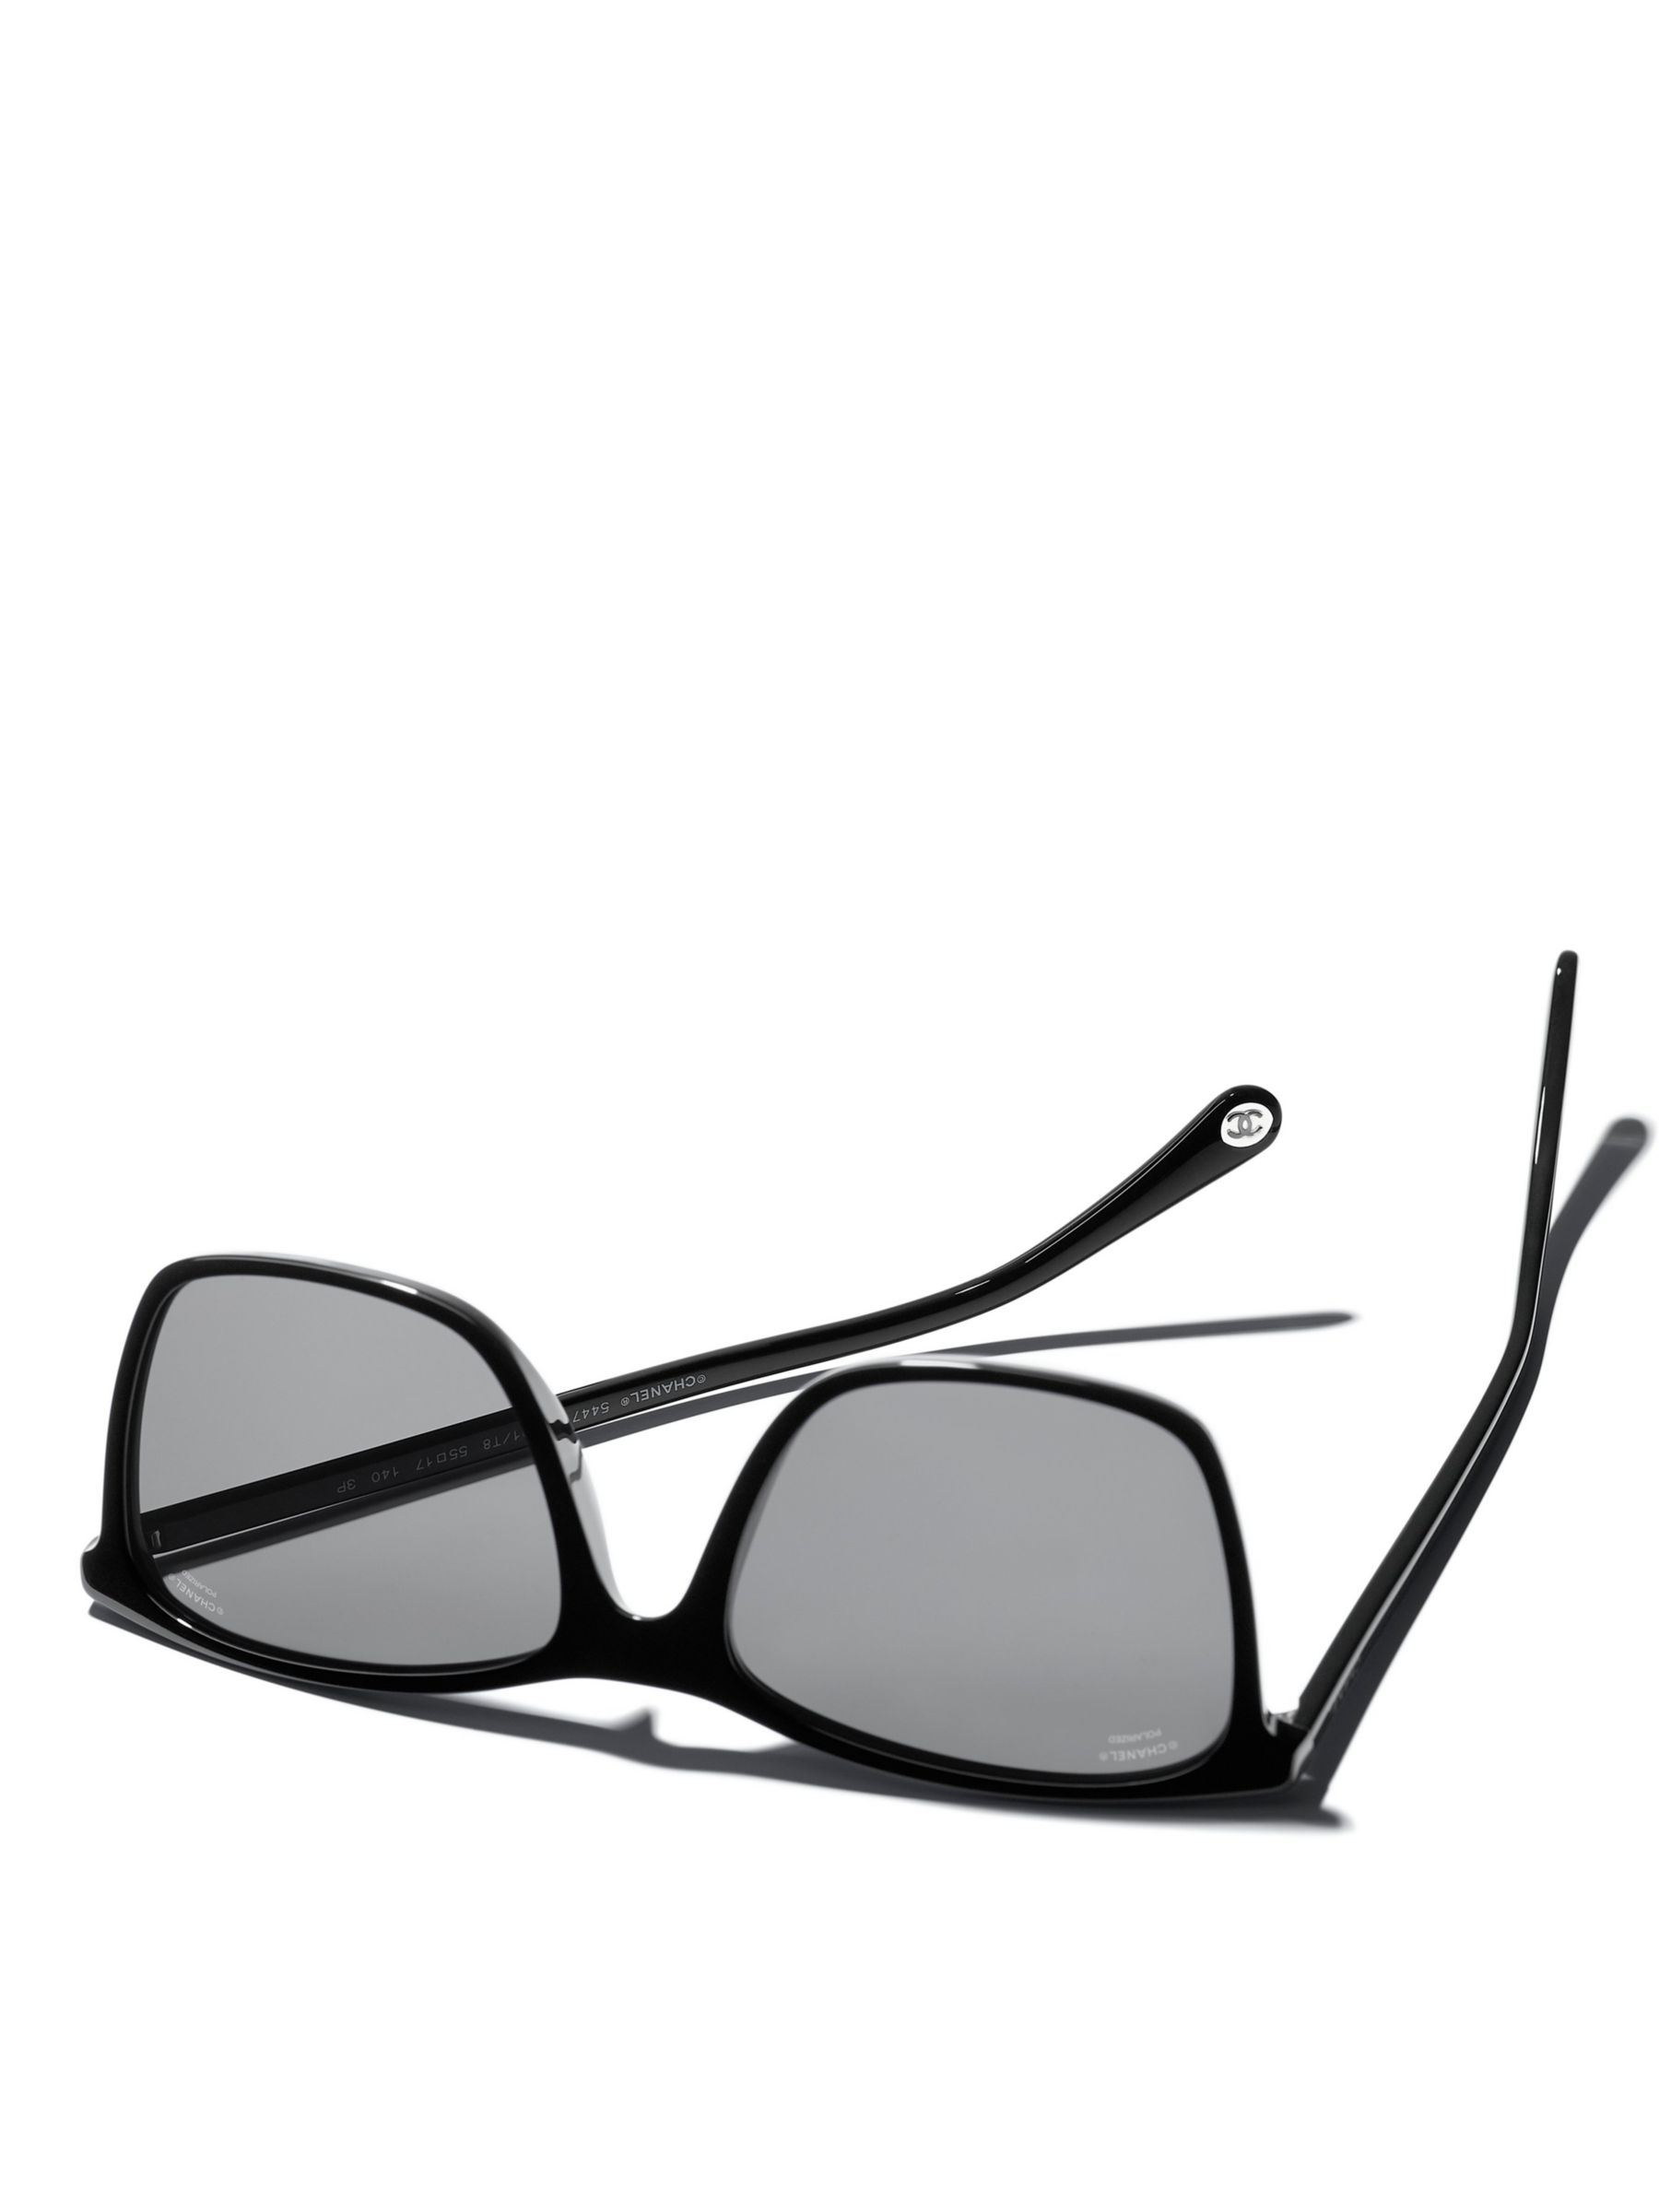 CHANEL Rectangular Sunglasses CH5447 Black/Grey at John Lewis